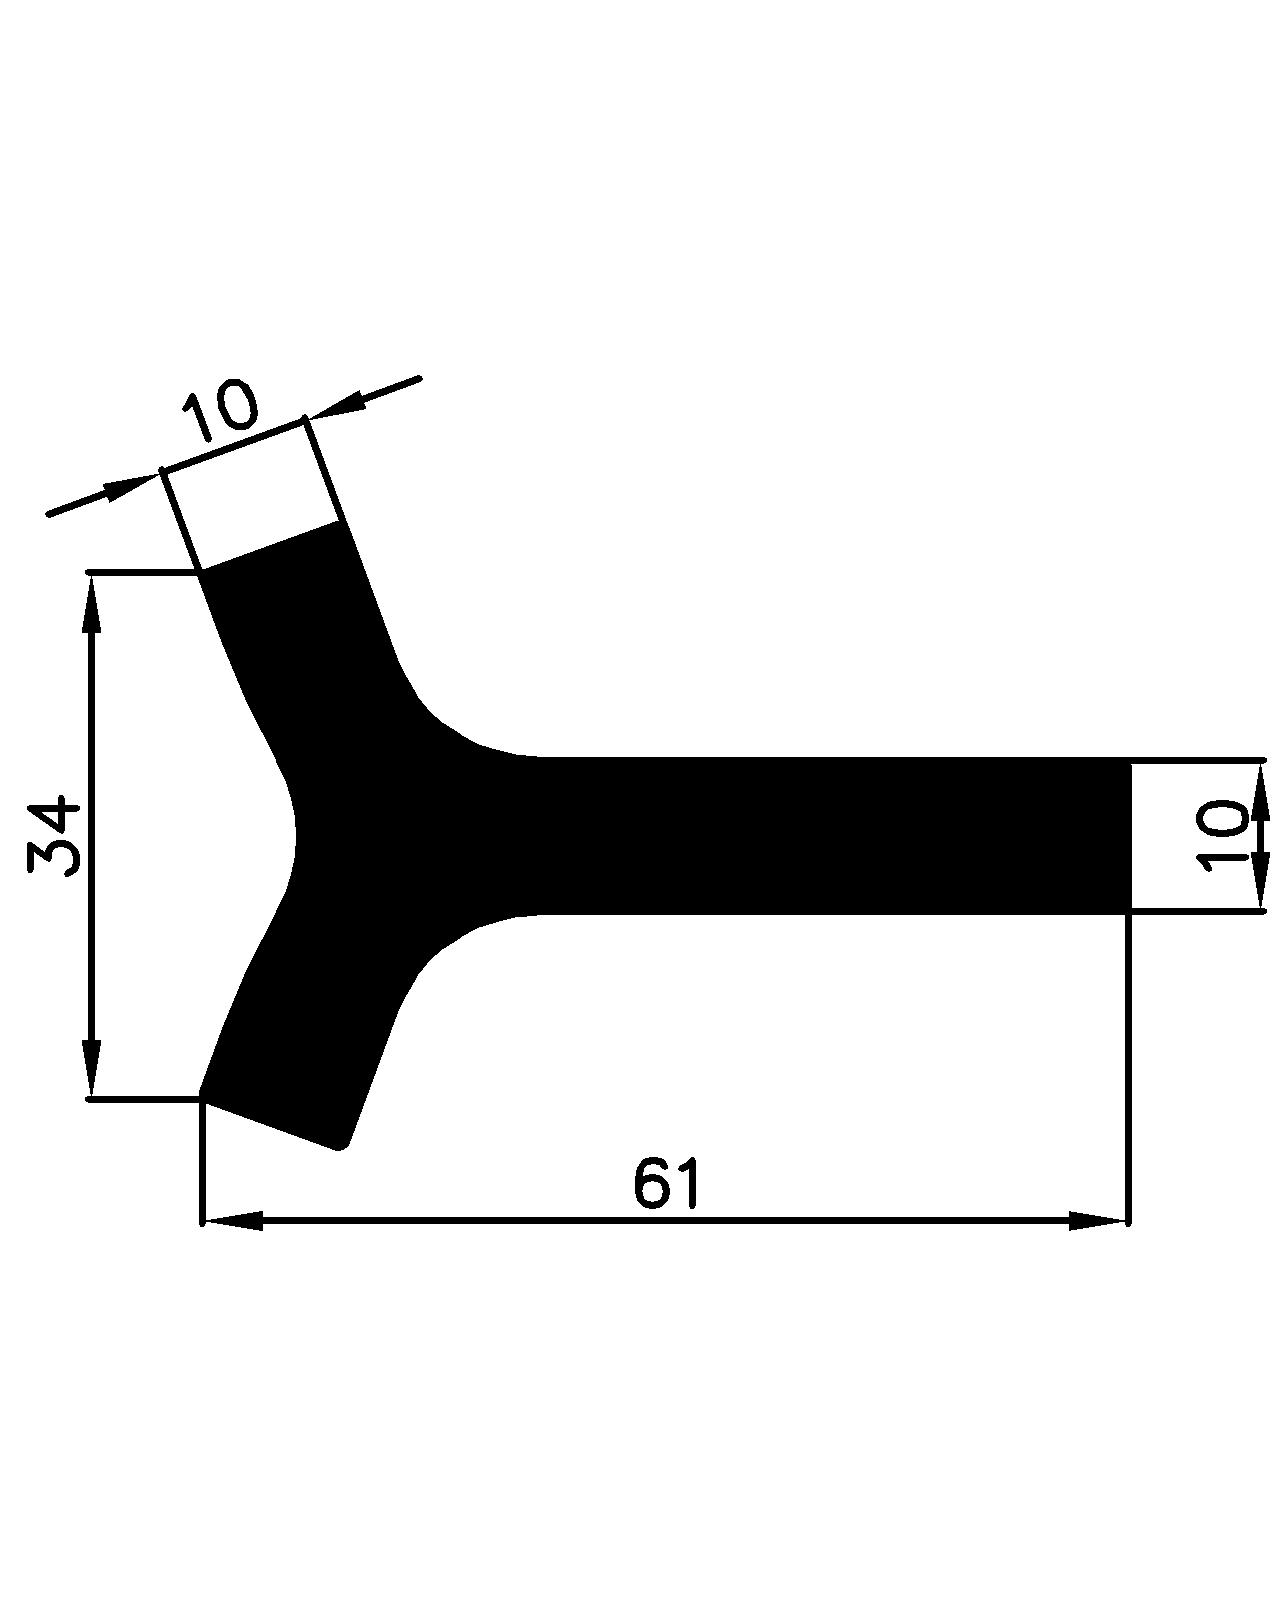 15960365KG - rubber profiles - Angle shape profiles